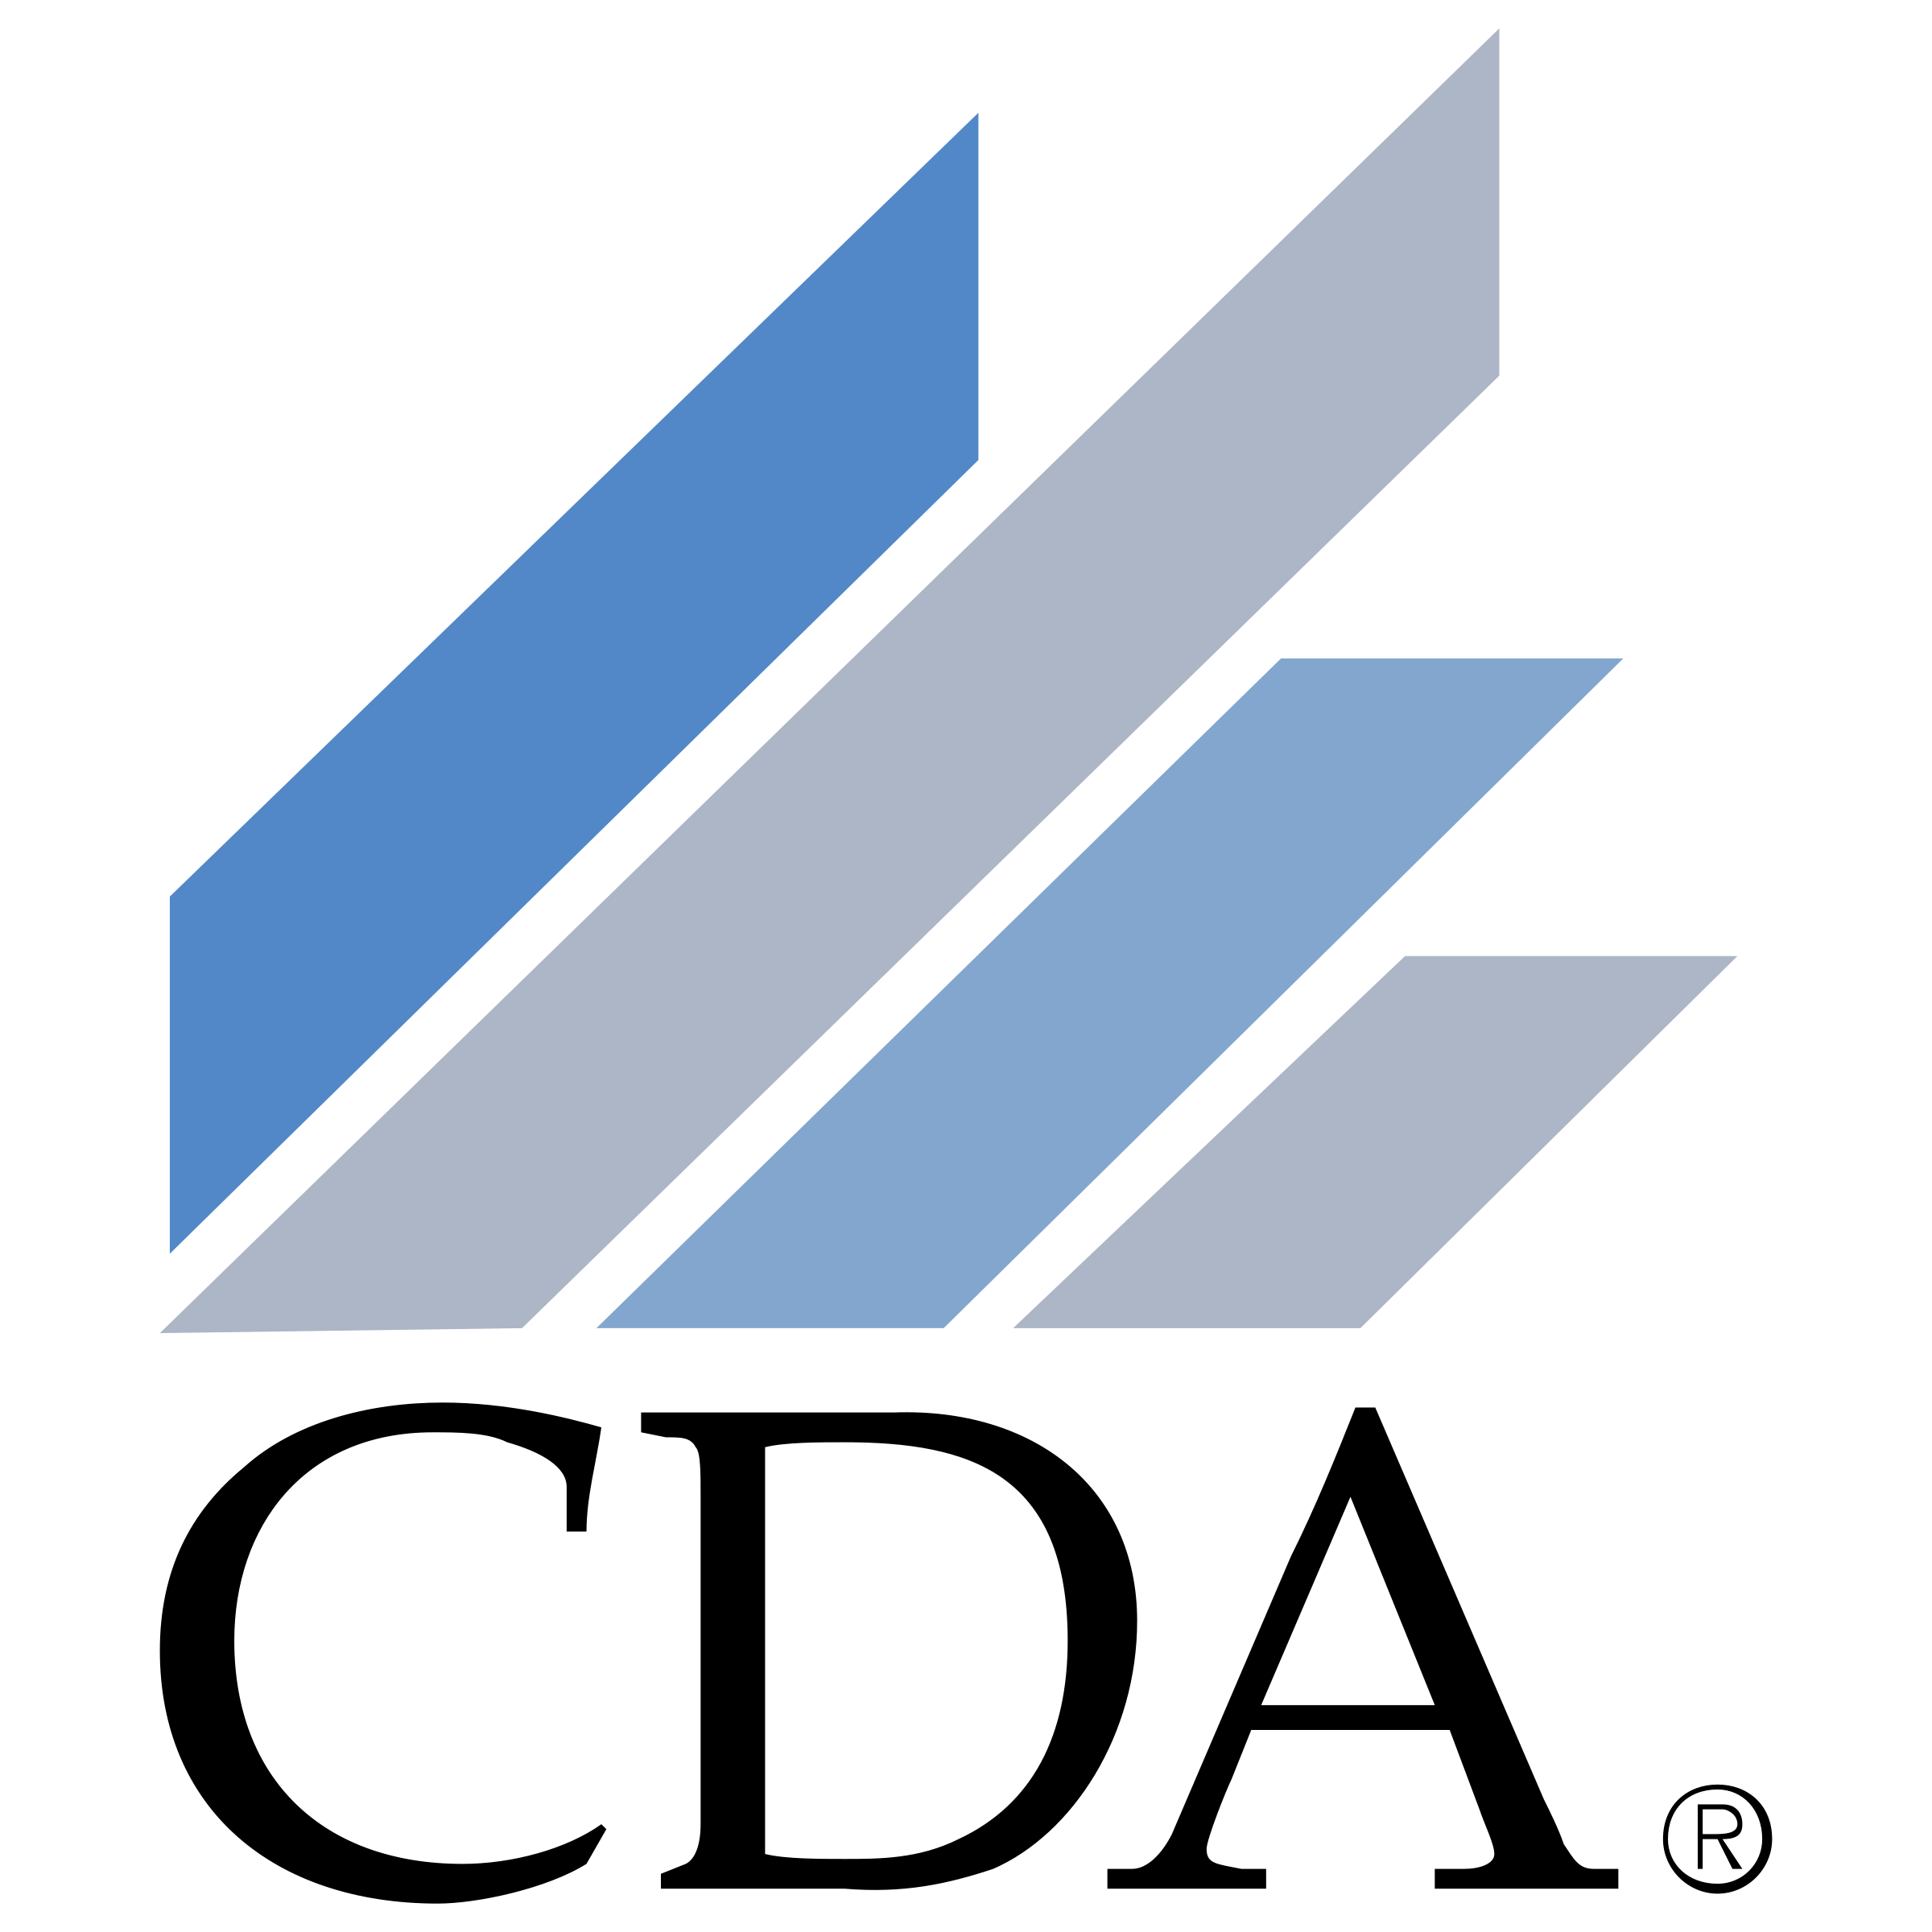 CDA Logo - CDA Logo PNG Transparent & SVG Vector